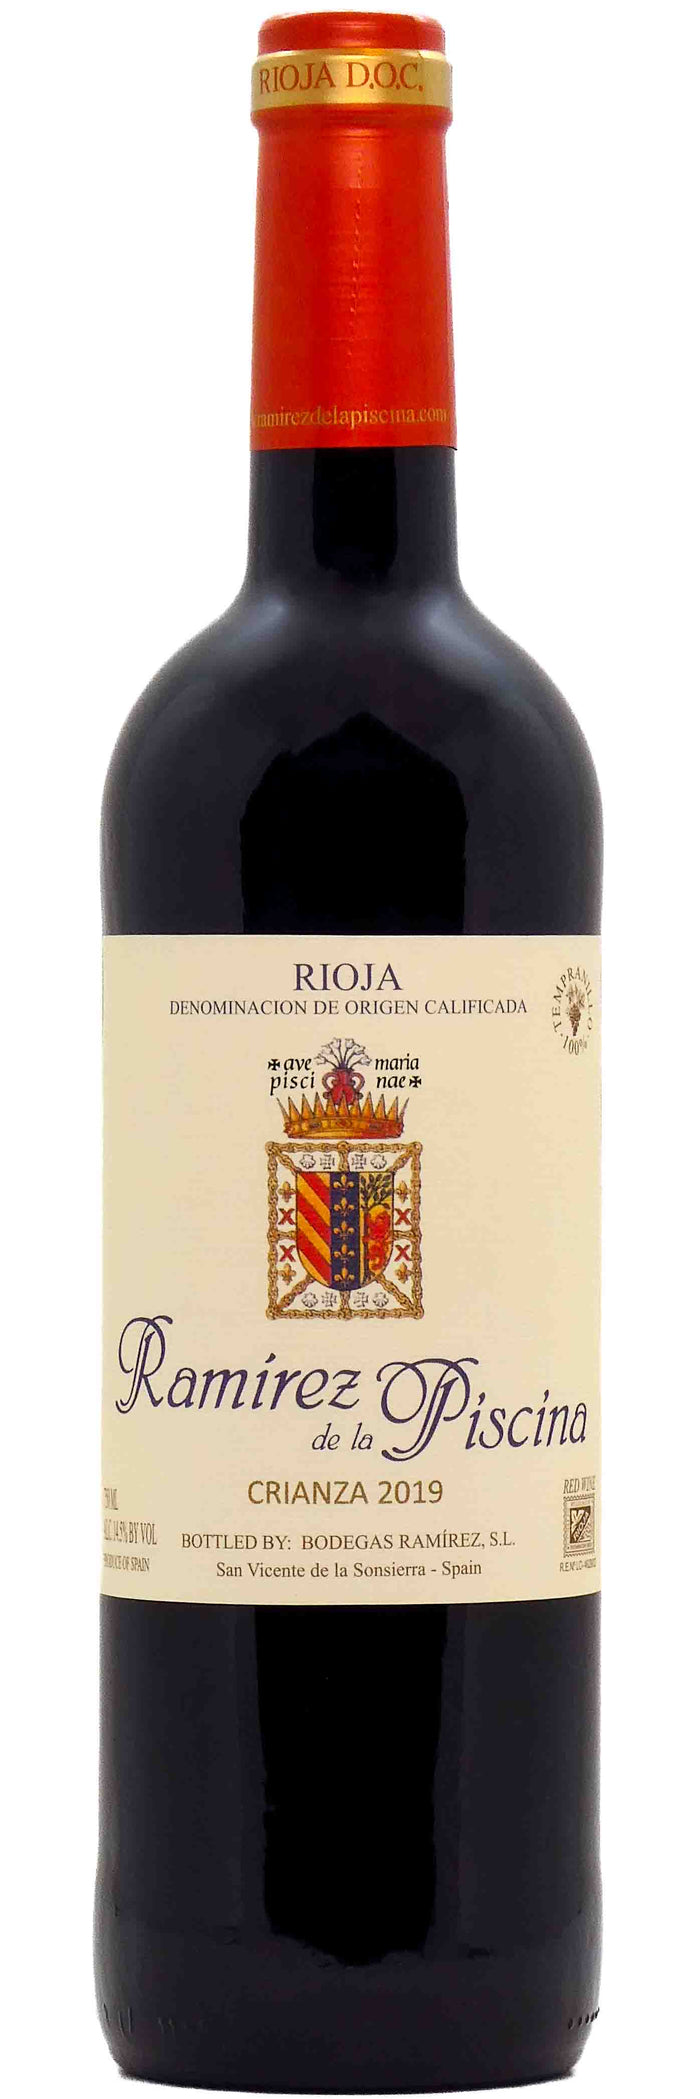 Ramirez de la Piscina Rioja Crianza 2019